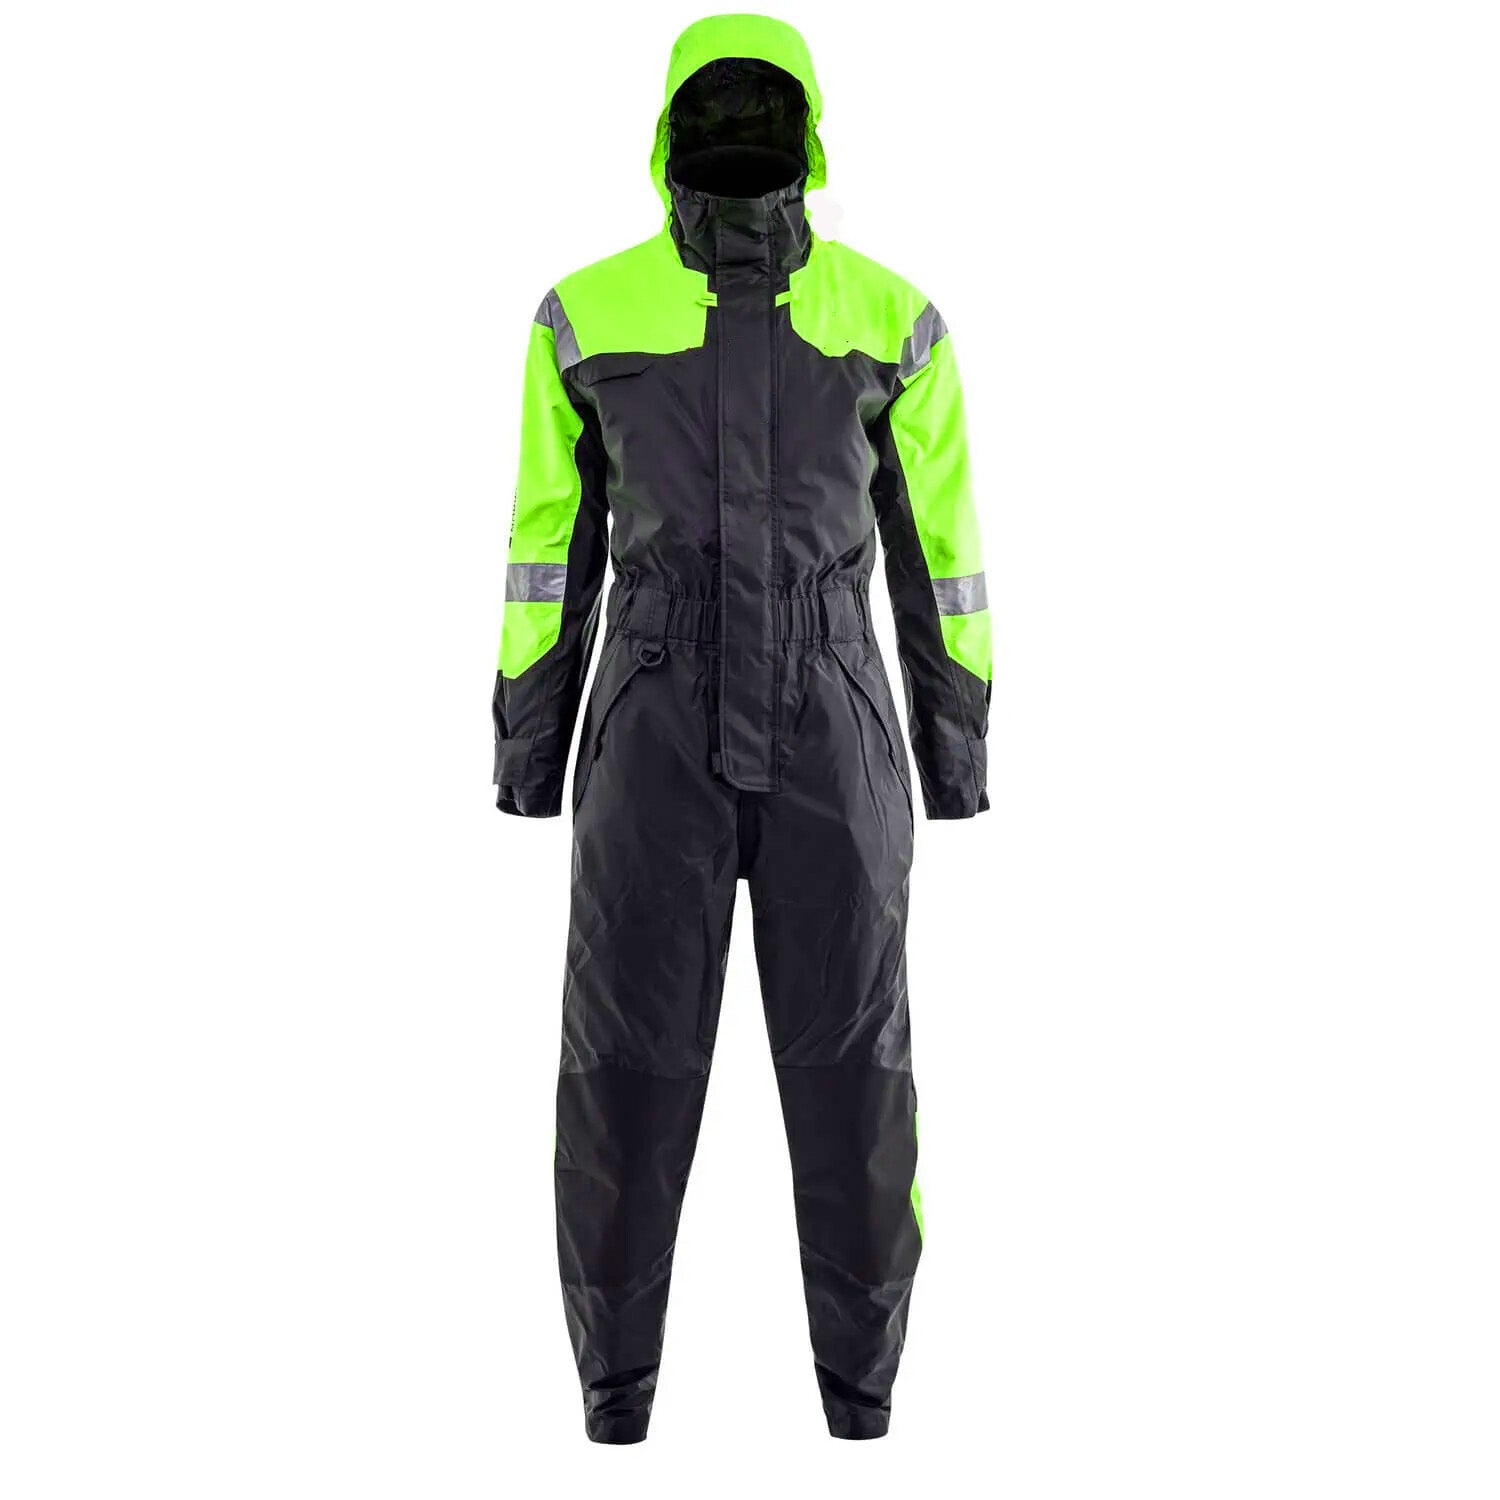 Flotation suit in green Design-02 front